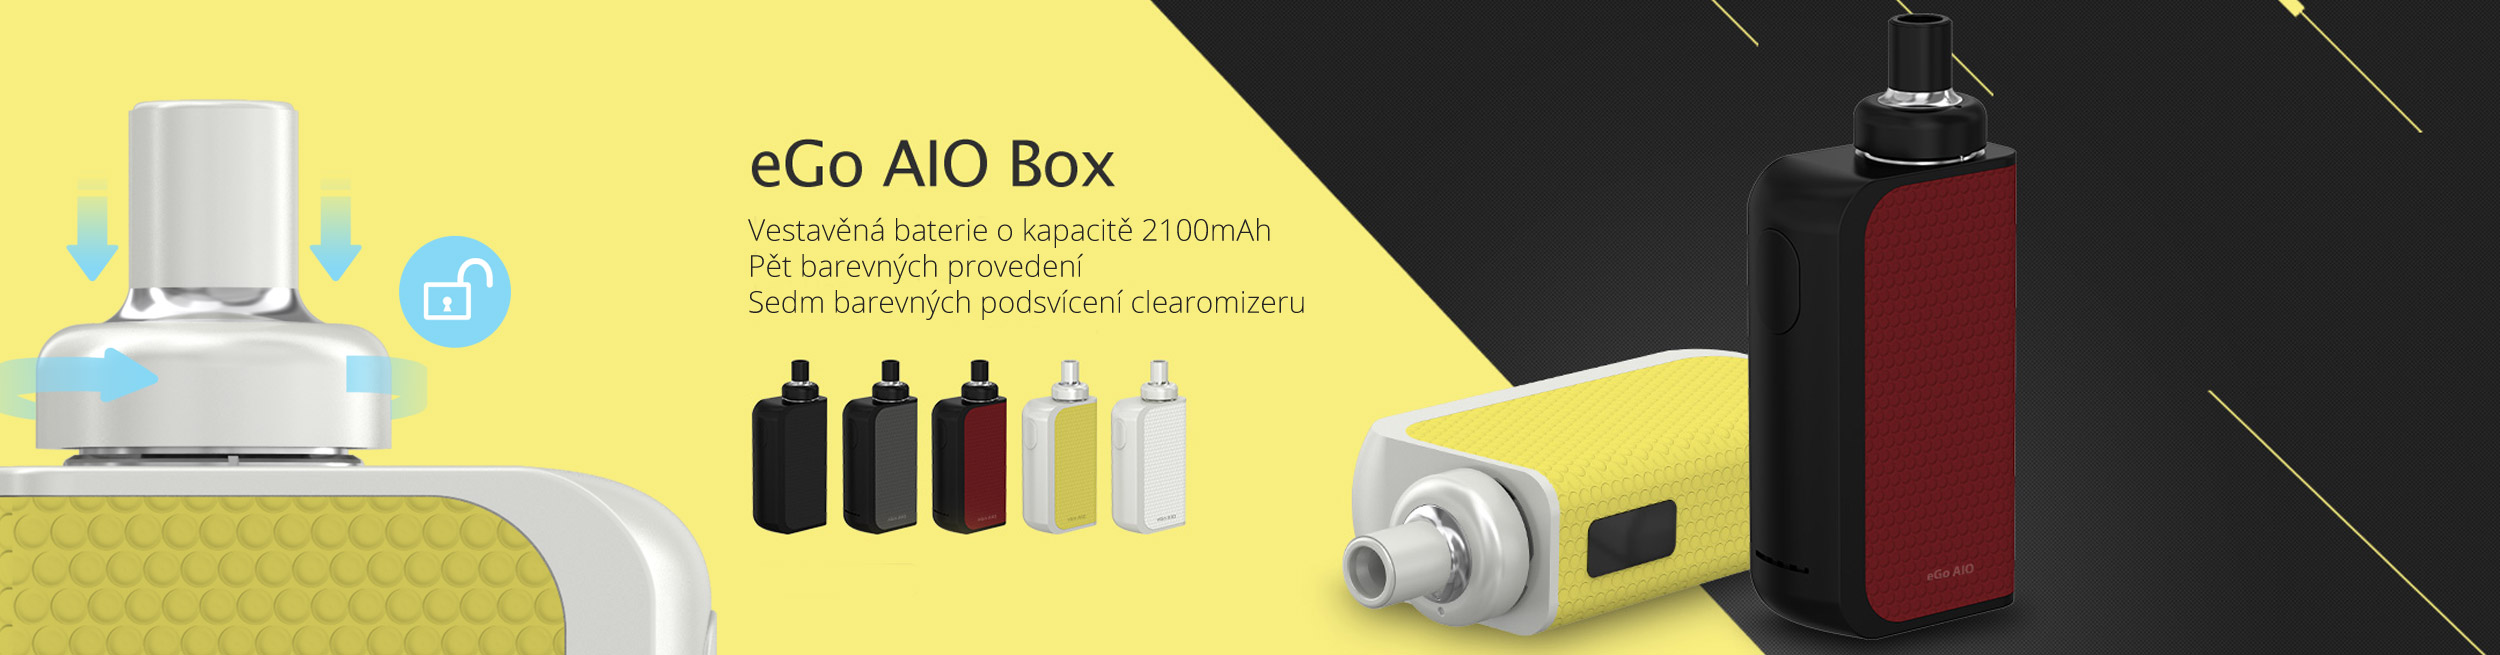 joyetech-ego-aio-box-grip-2100mah-elektronicka-cigareta